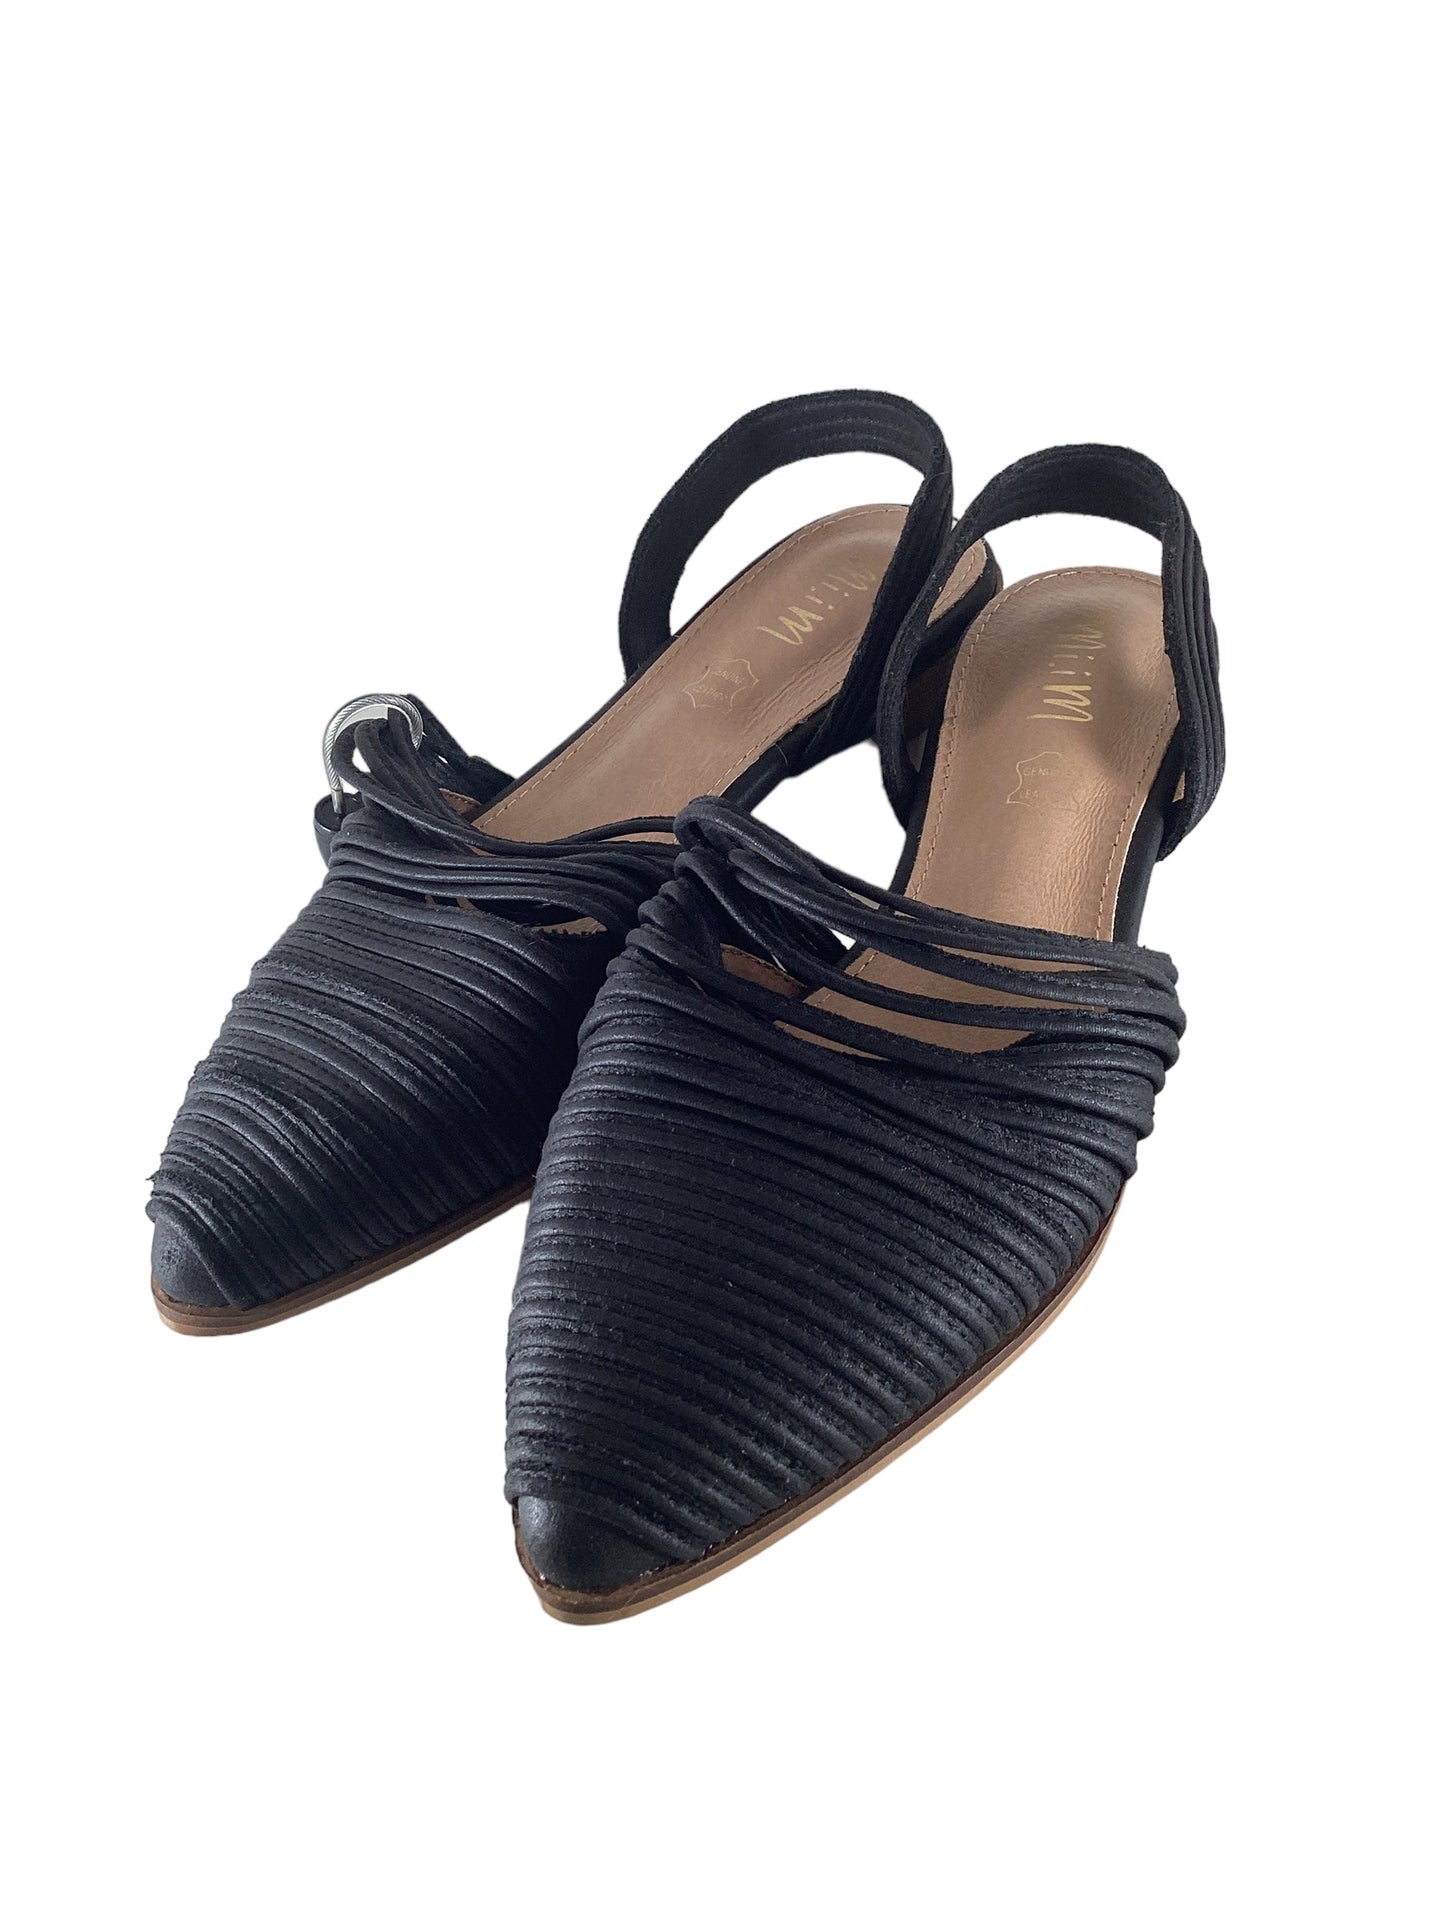 Black Shoes Flats Clothes Mentor, Size 8.5